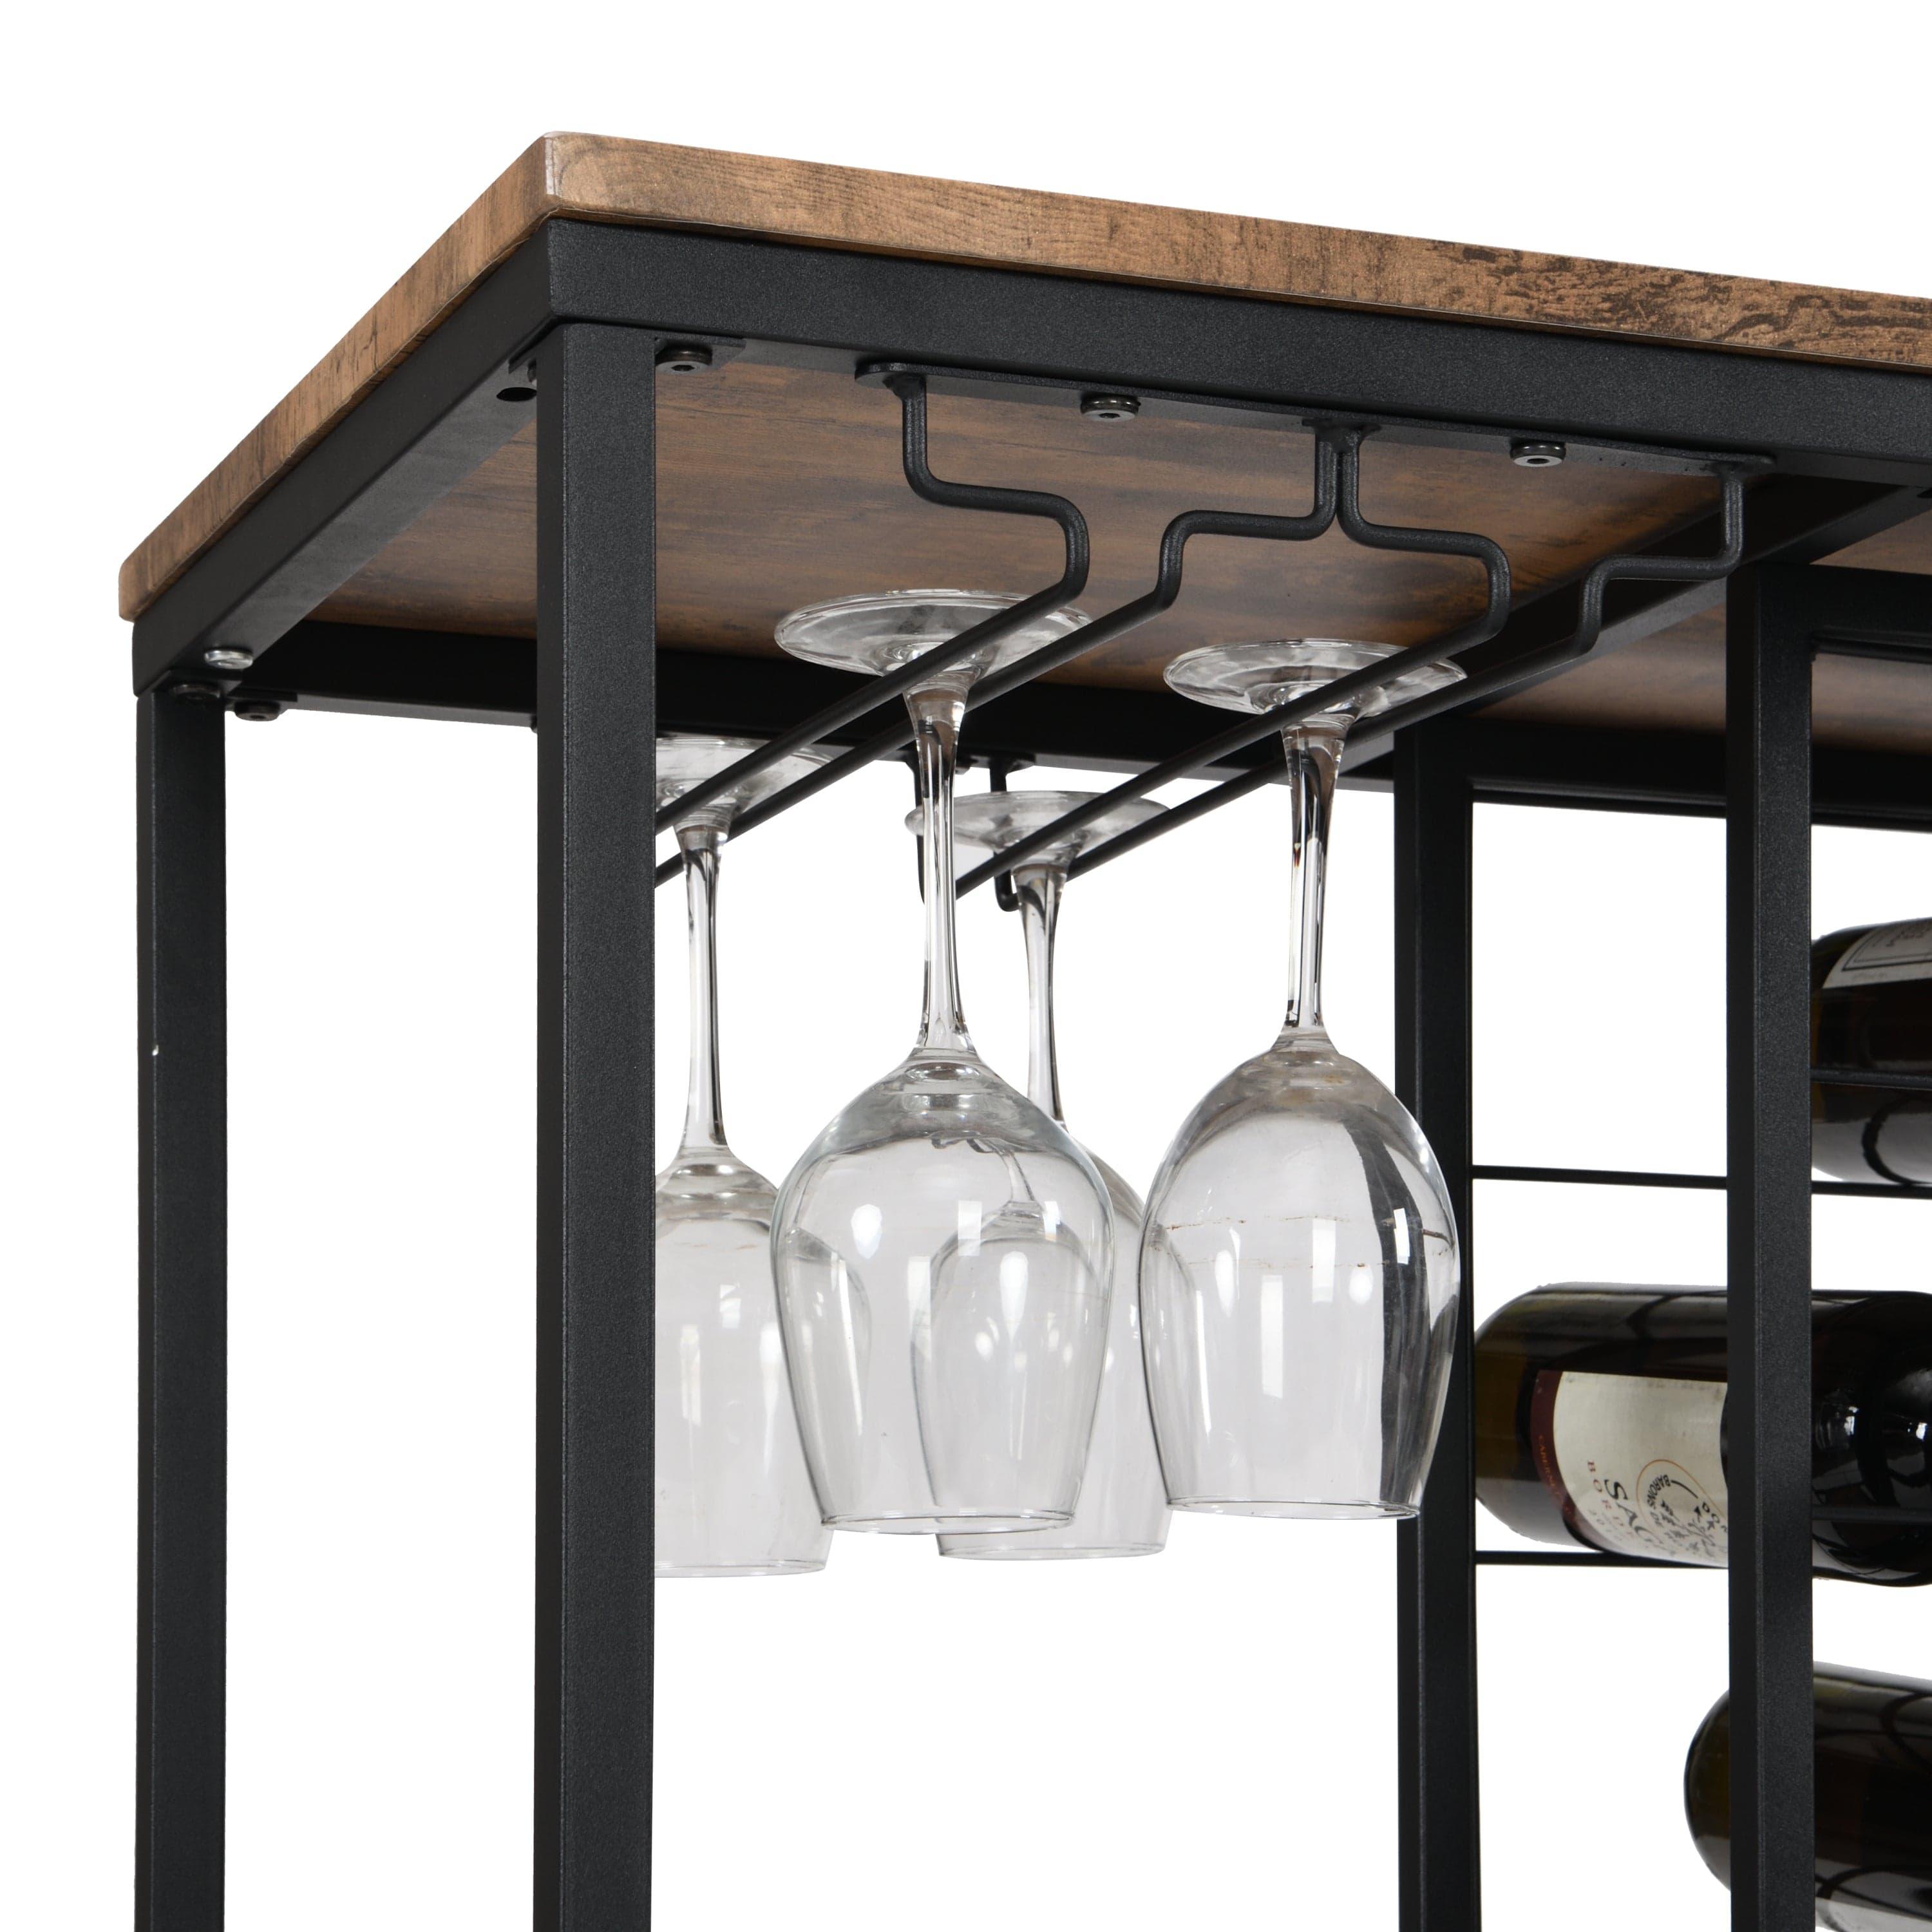 Shop Industrial Wine Rack Kitchen Bar for Home  3 -Tier Storage Shelves Mademoiselle Home Decor